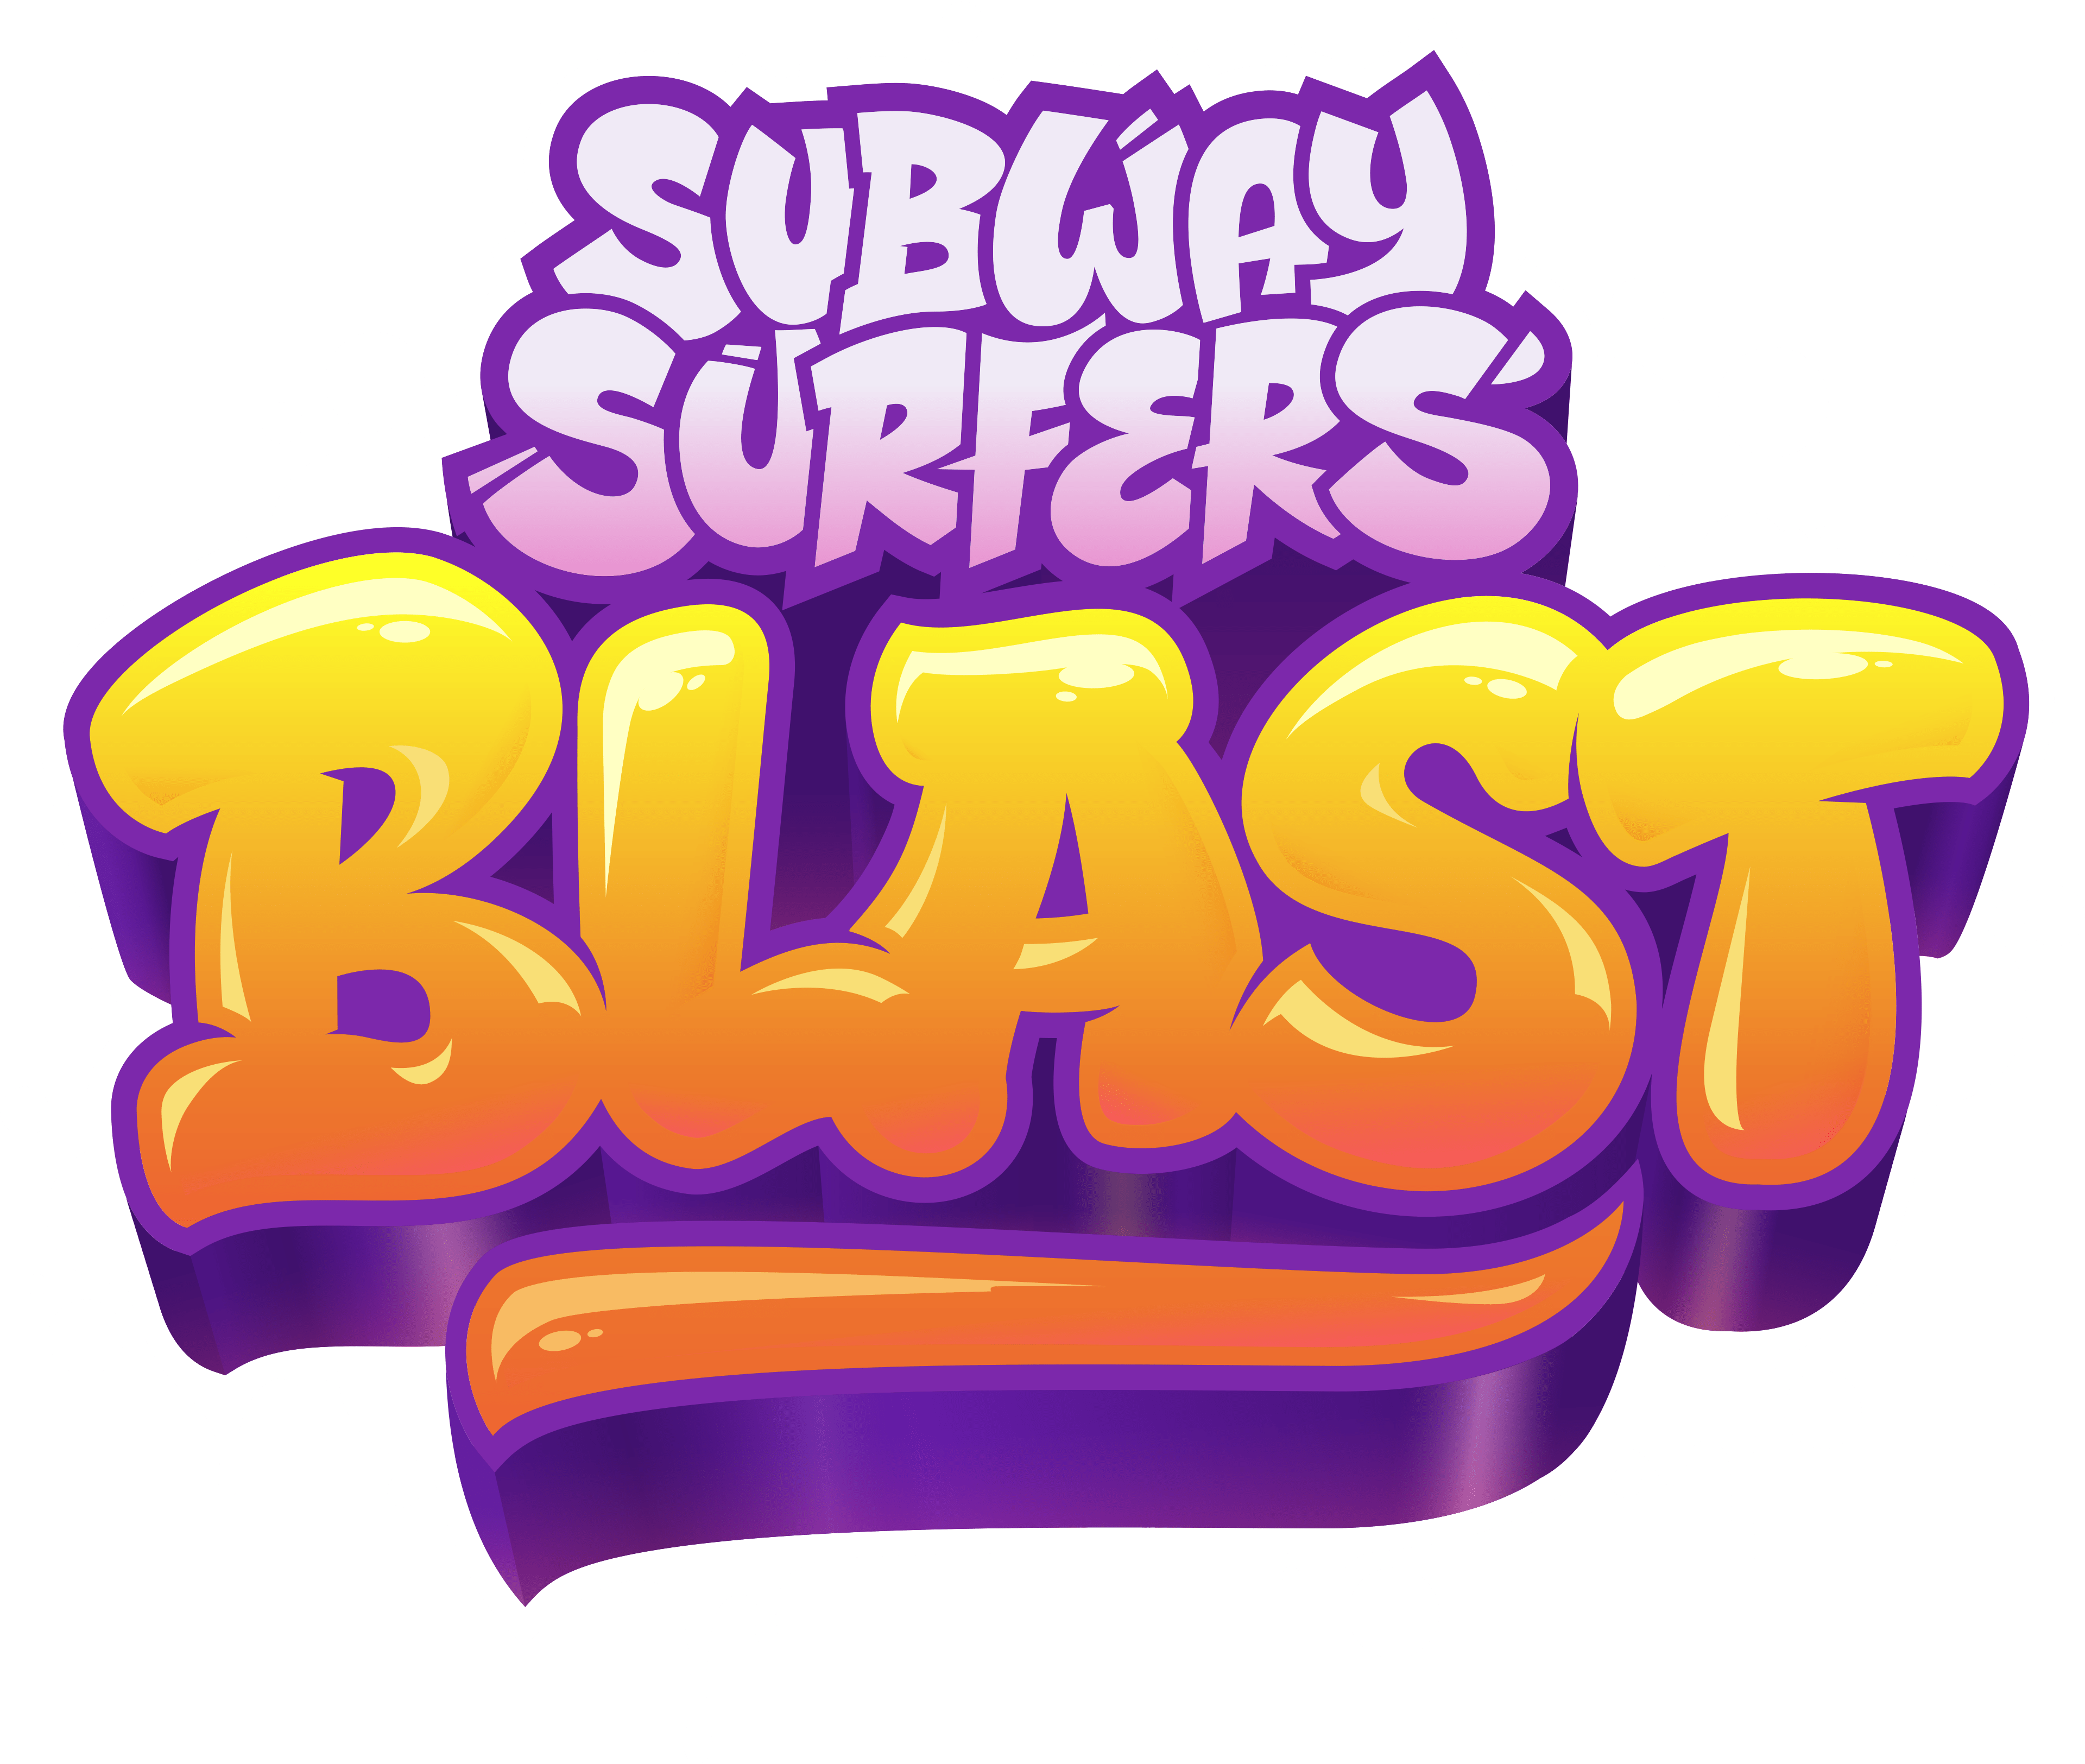 Subway Surfers Blast Official Trailer 